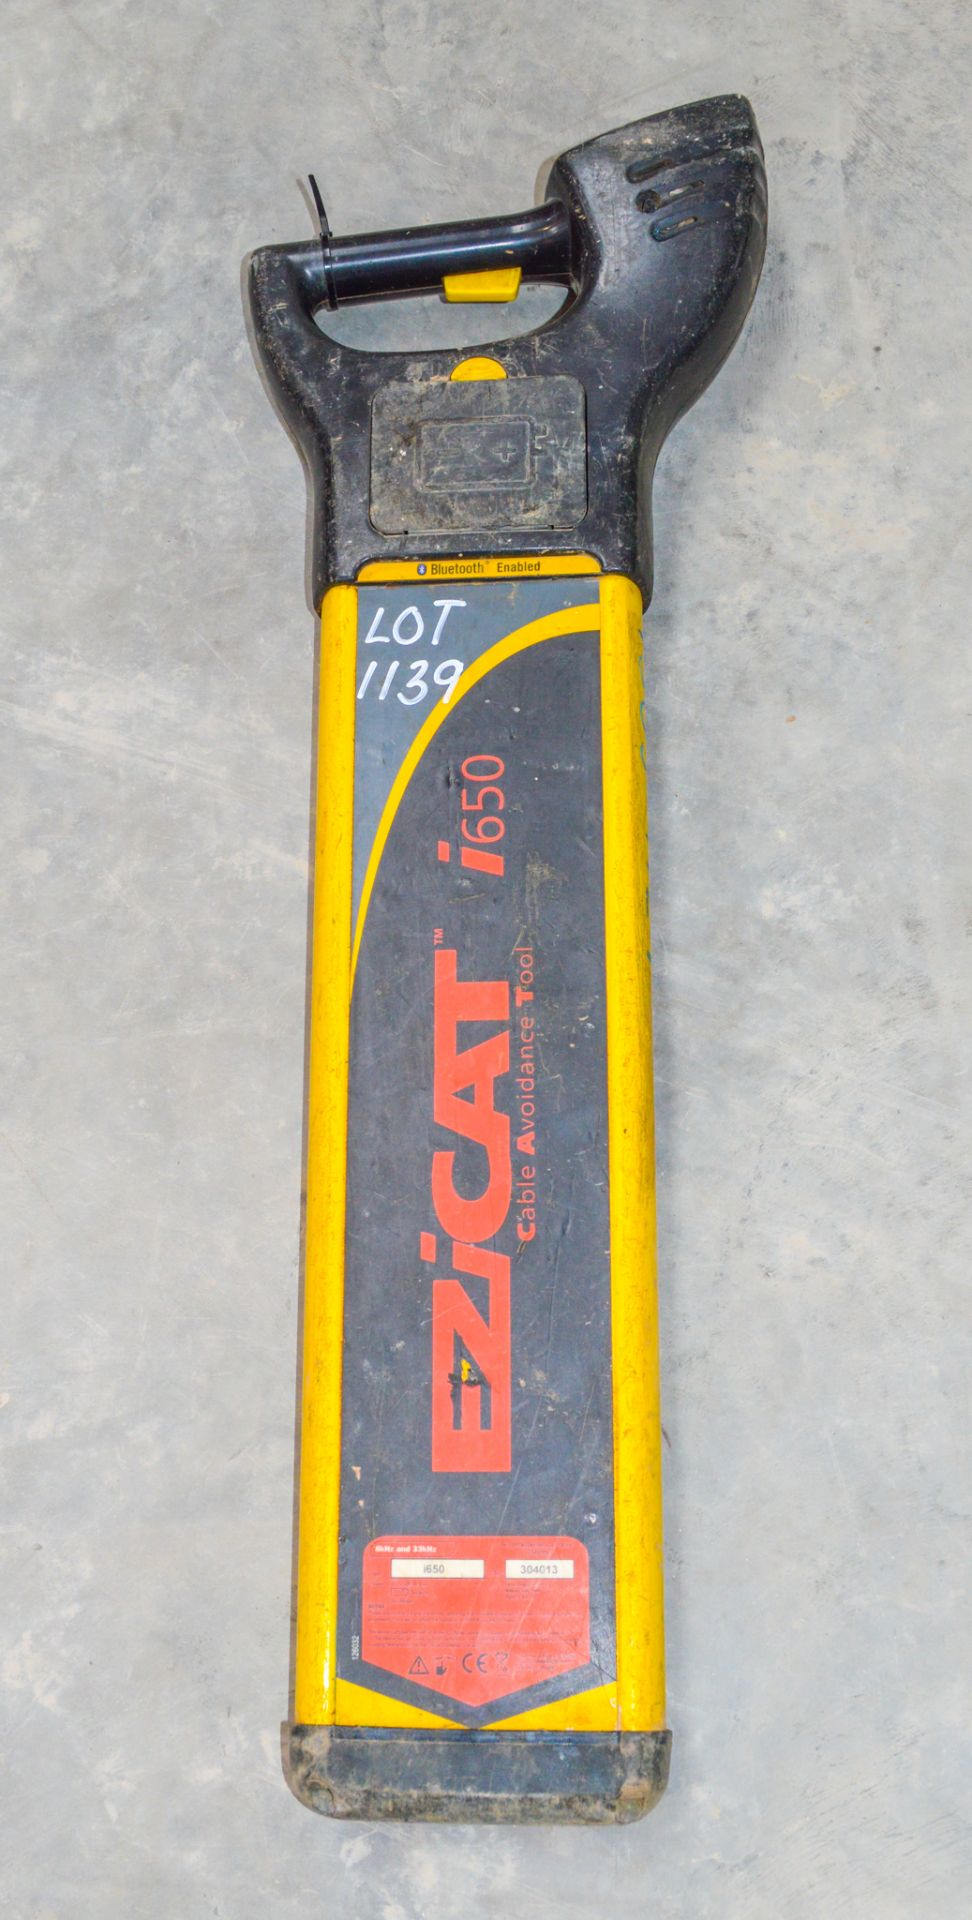 Ezicat i650 cable avoidance tool 1503-1129